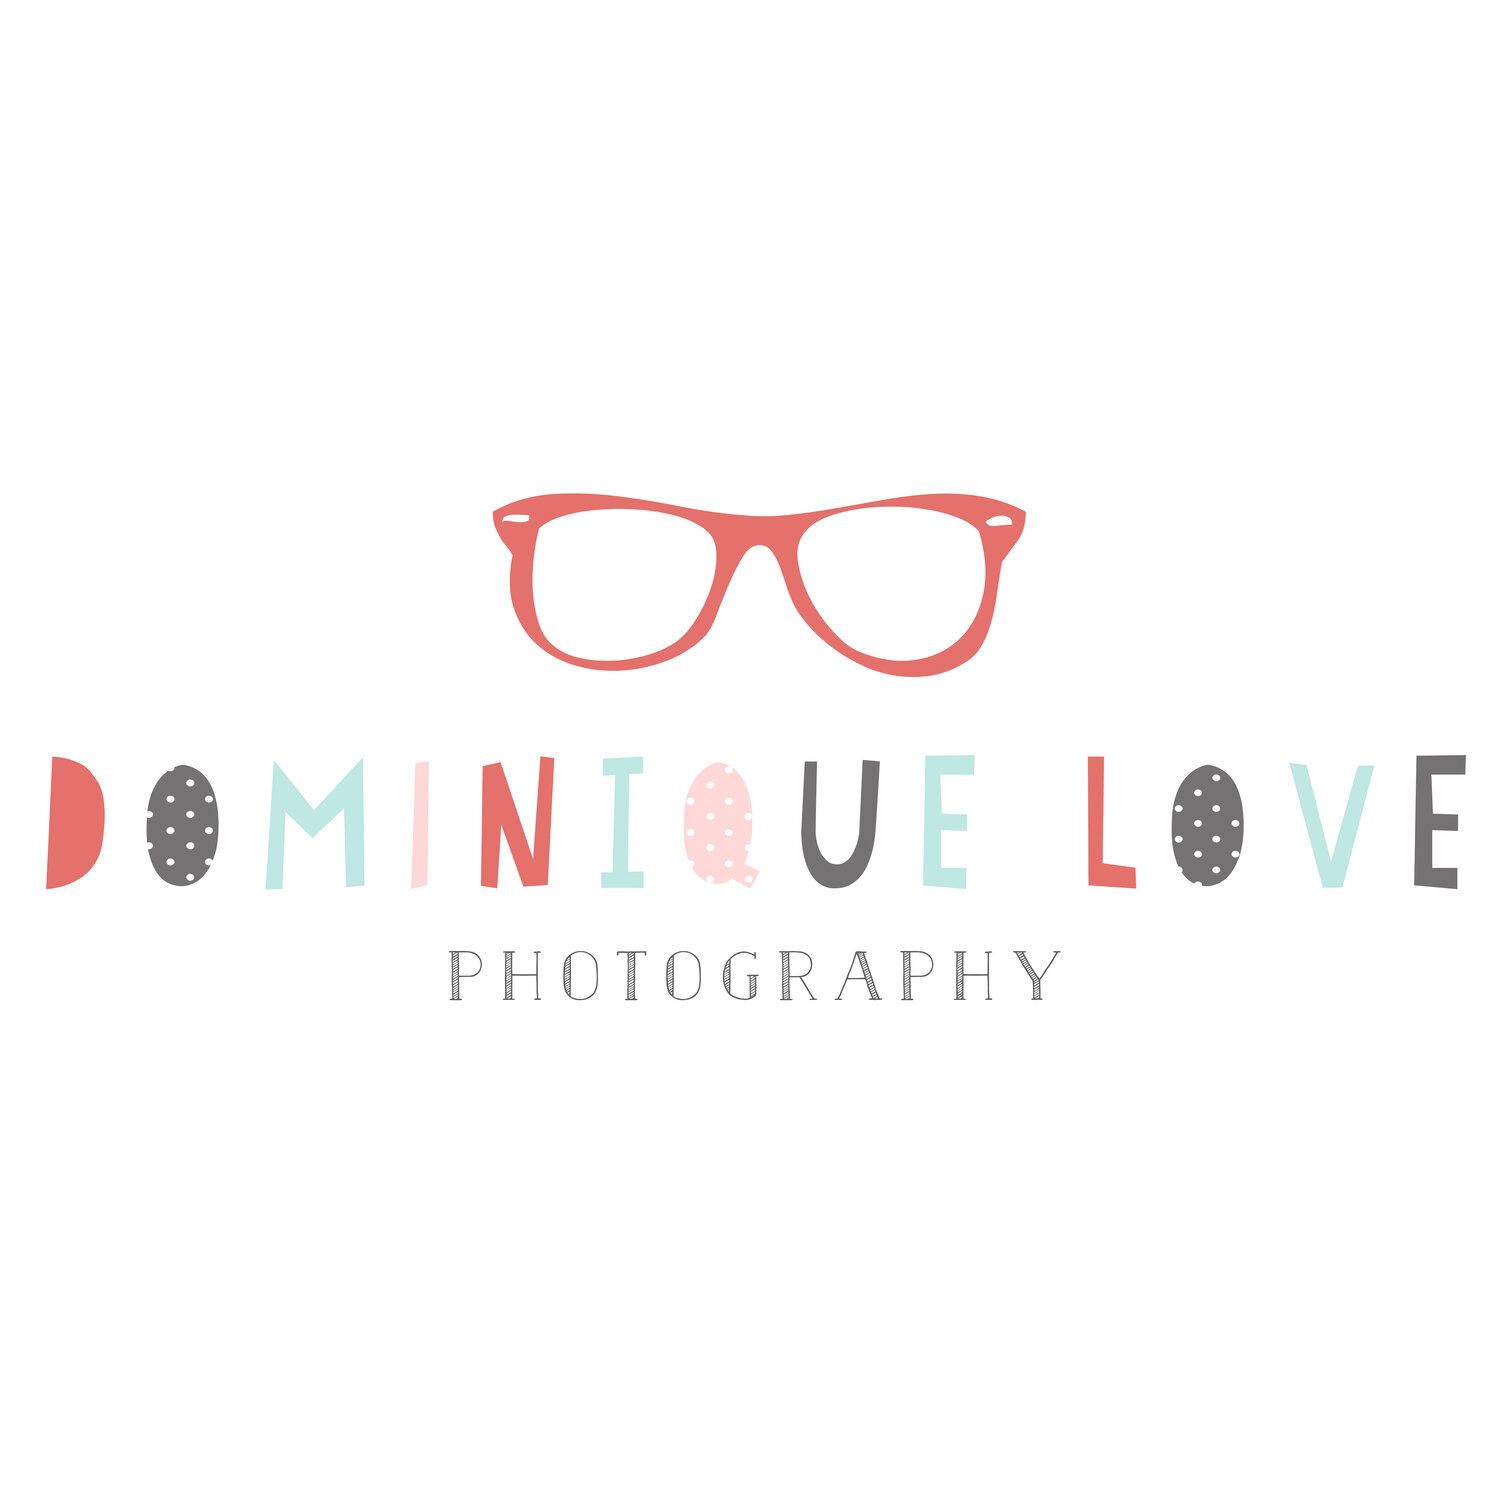 Dominique Love Photography